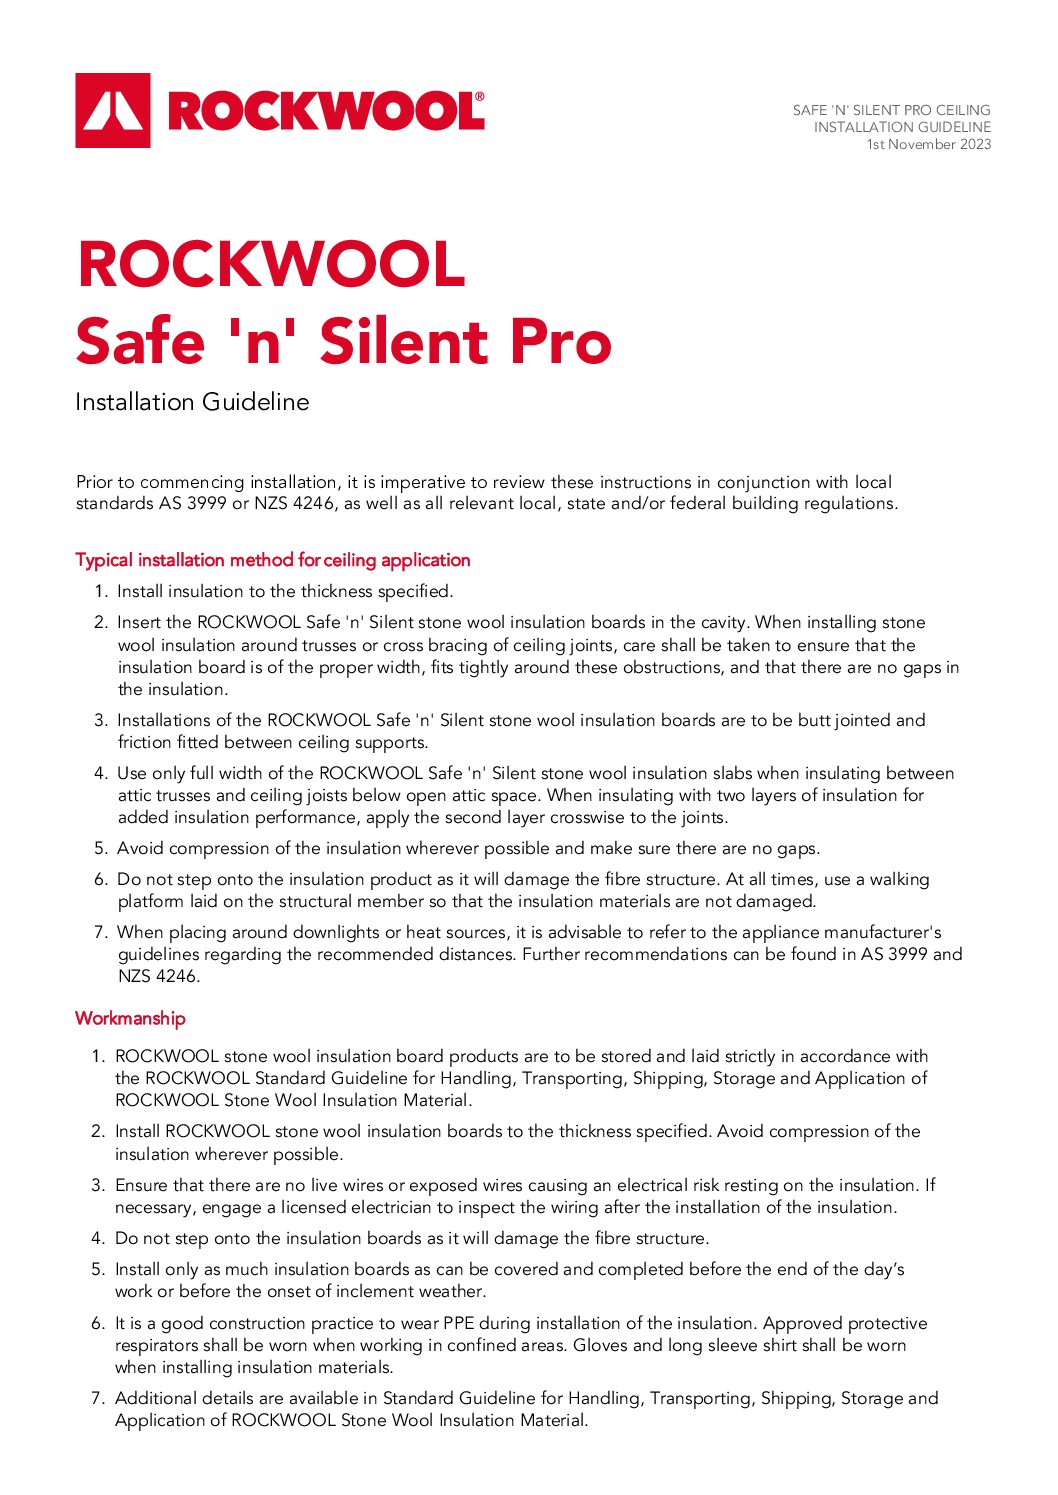 Installation Guidelines – Rockwool Safe ‘n’ Silent Pro – Ceilings